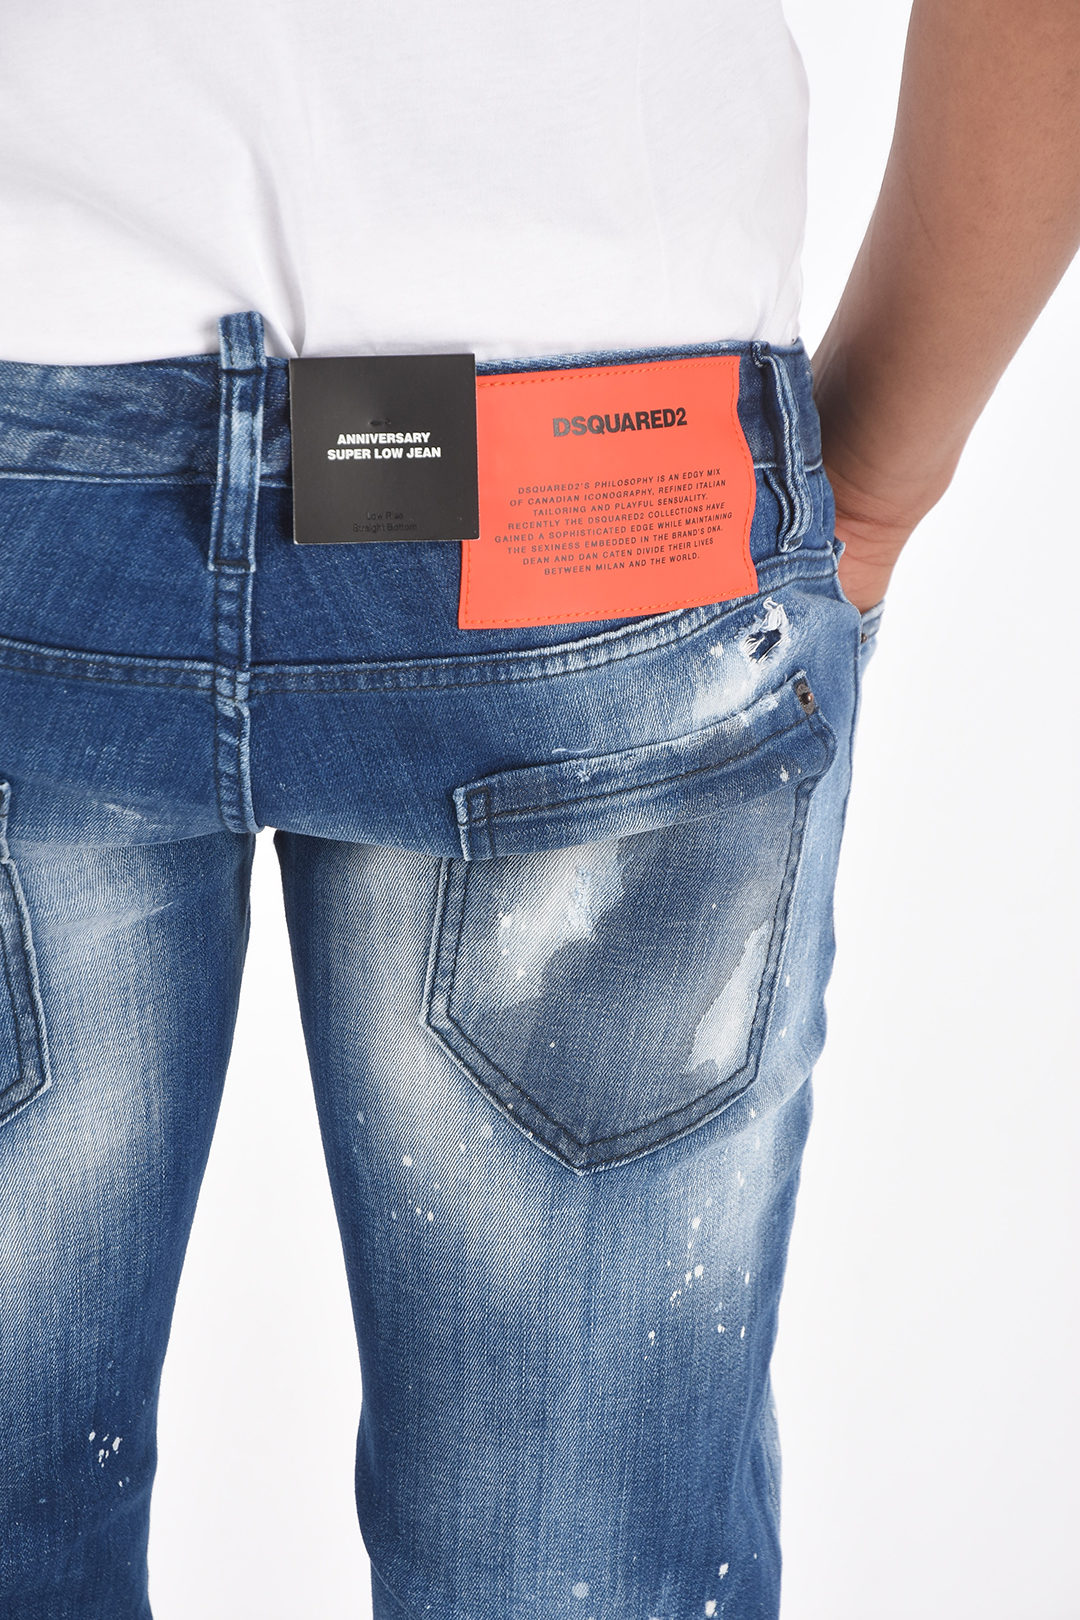 Shuraba flauw Ontkennen Dsquared2 15,5cm Low rise ANNIVERSARY SUPER LOW vintage effect jeans men -  Glamood Outlet